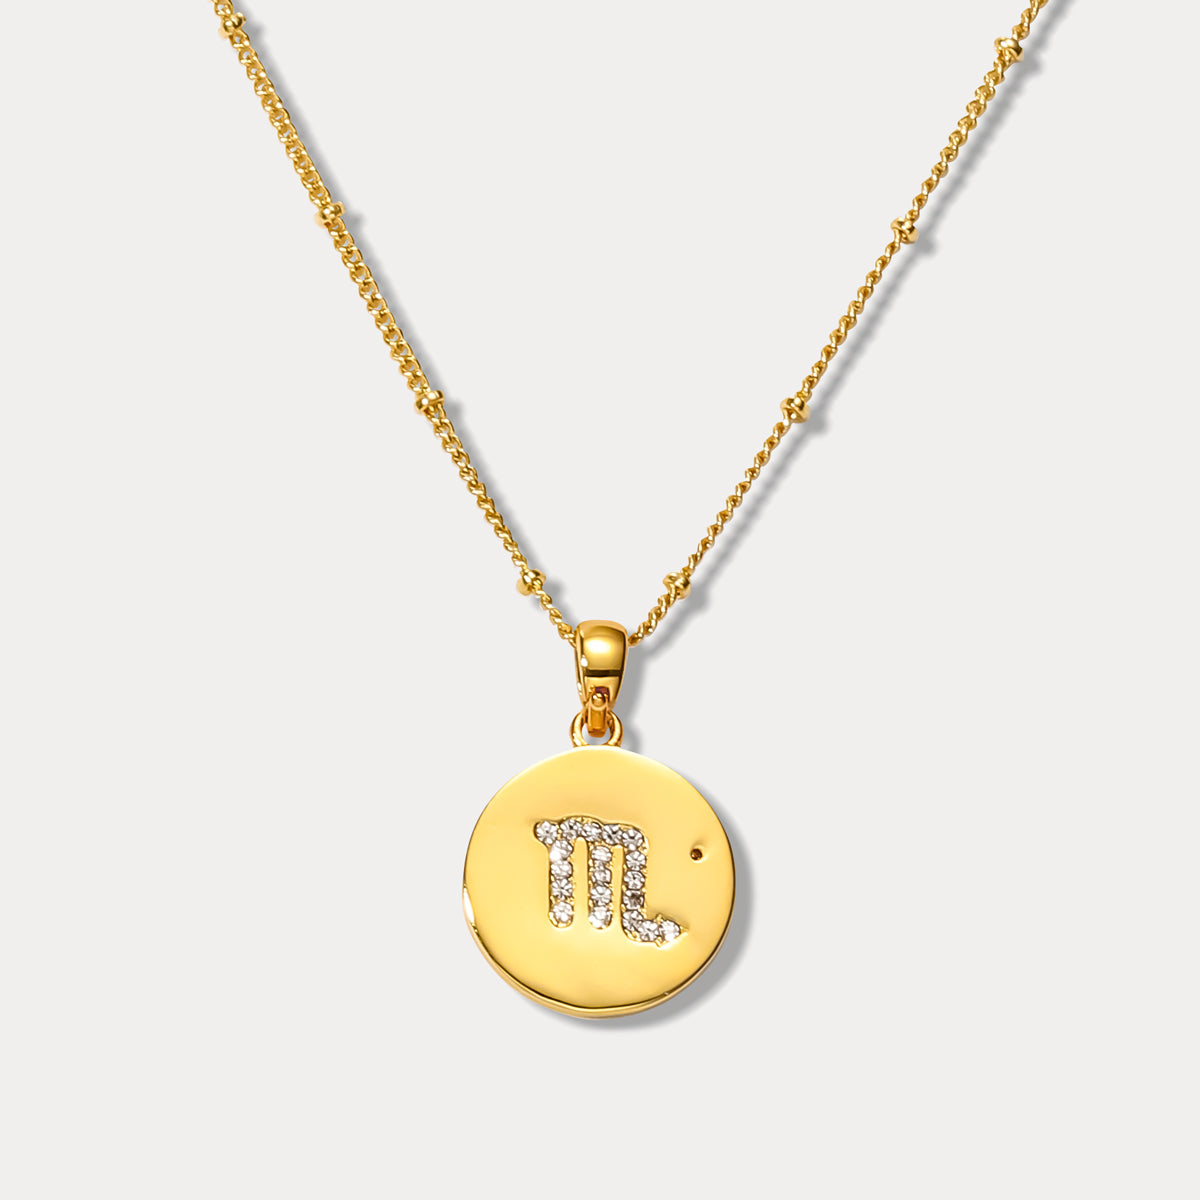 Scorpio Constellation Coin Pendant Astrology Necklace